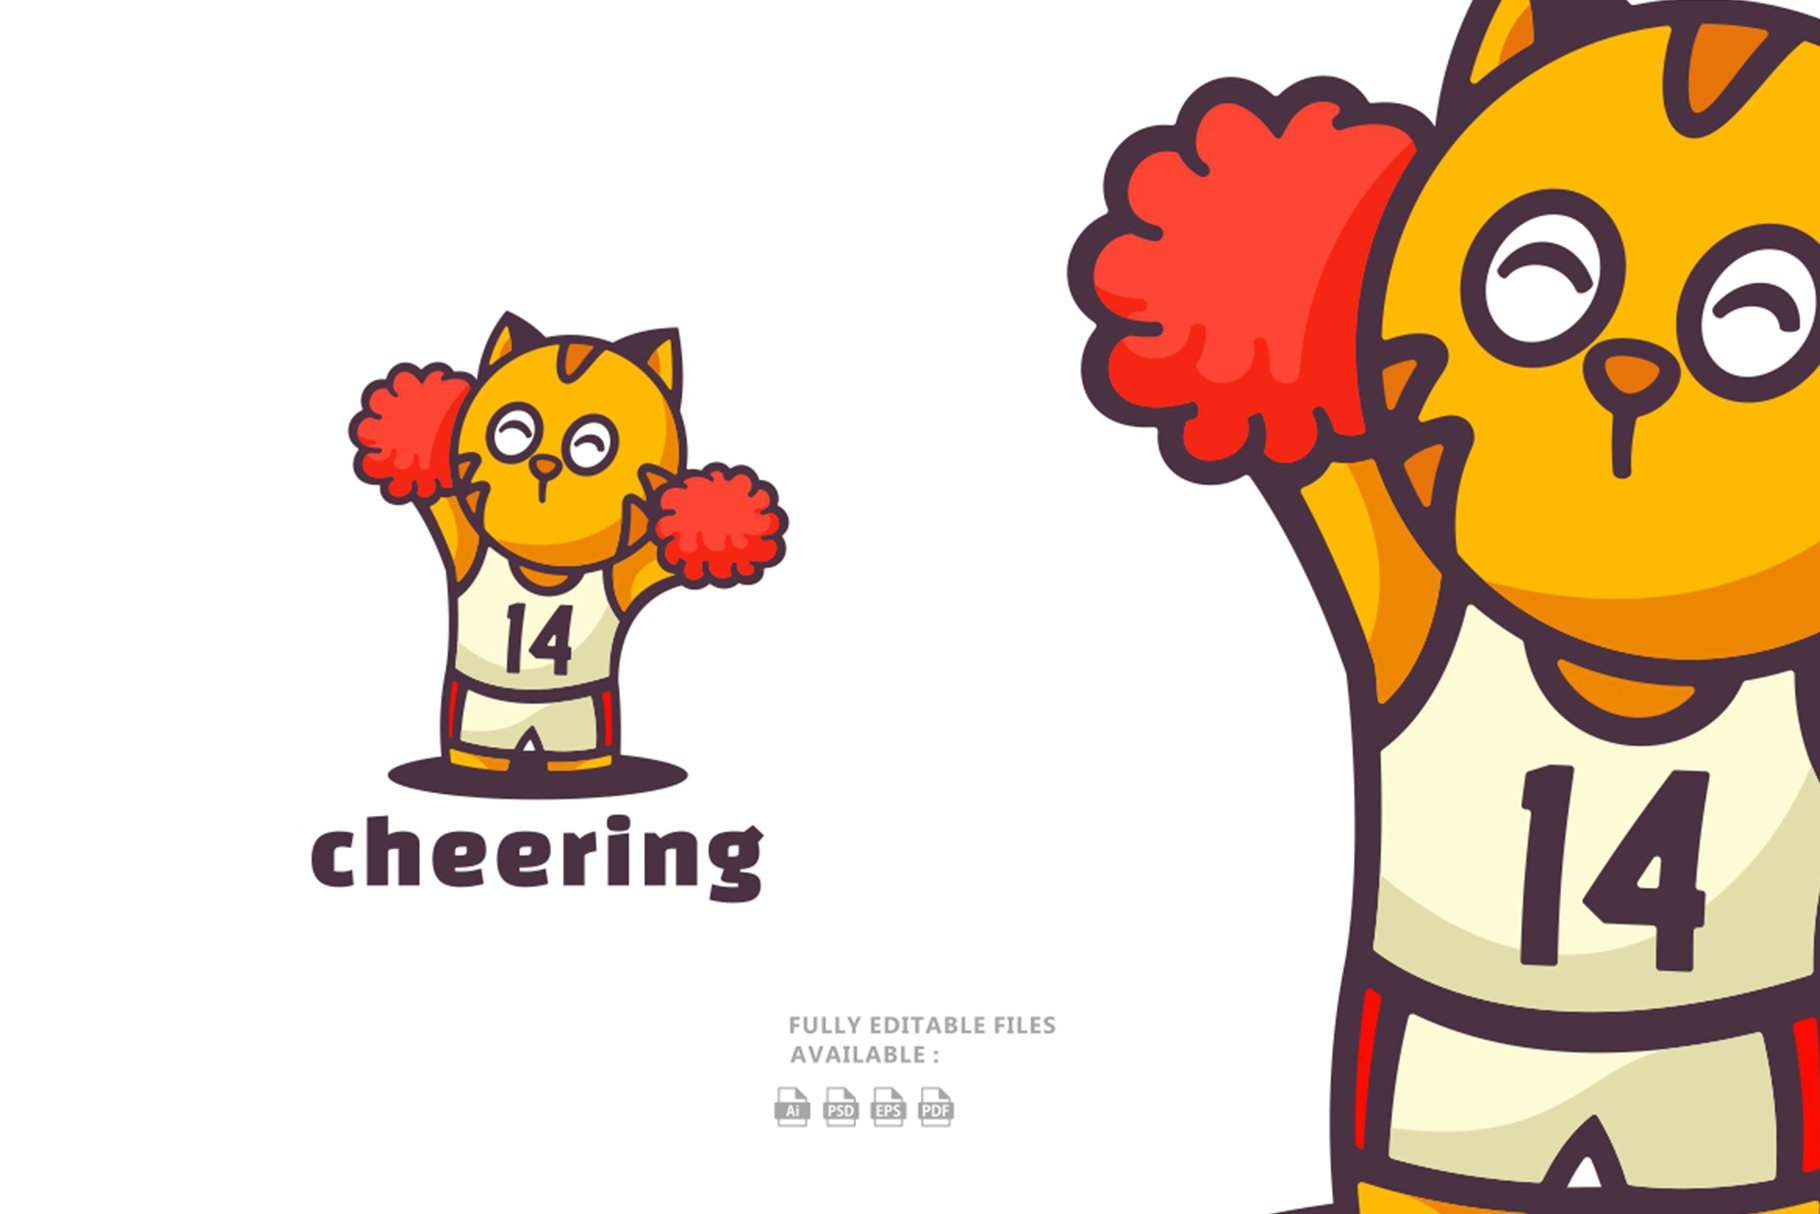 Cheerleader Cat Cartoon Logo cover image.